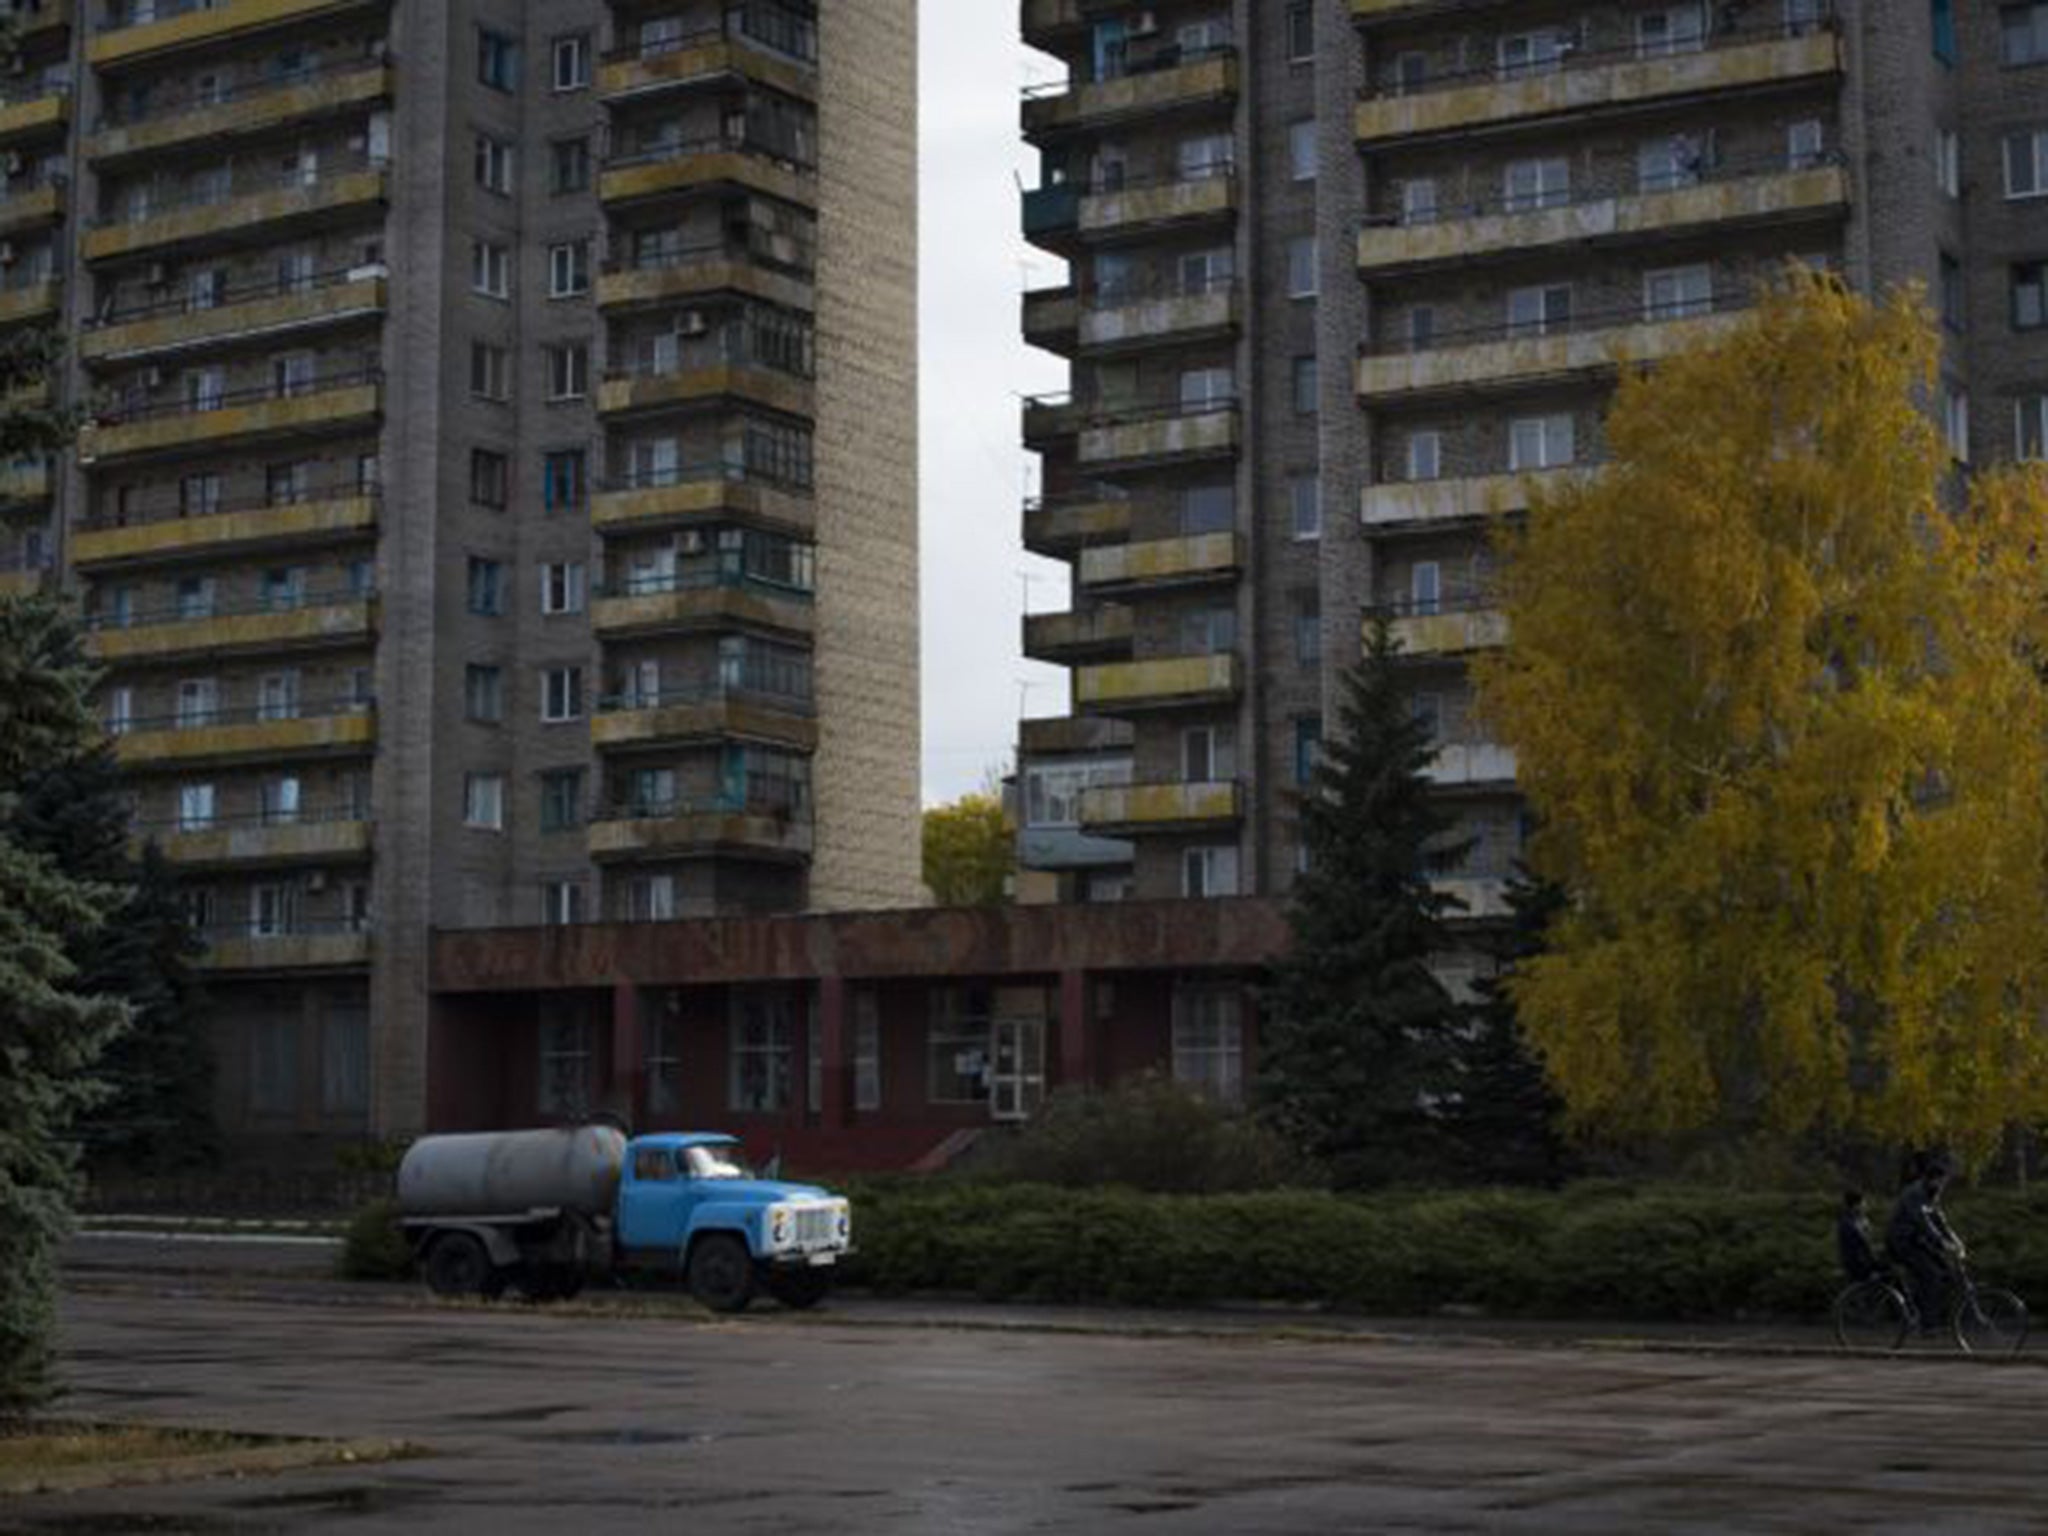 Residential blocks in eastern Ukraine